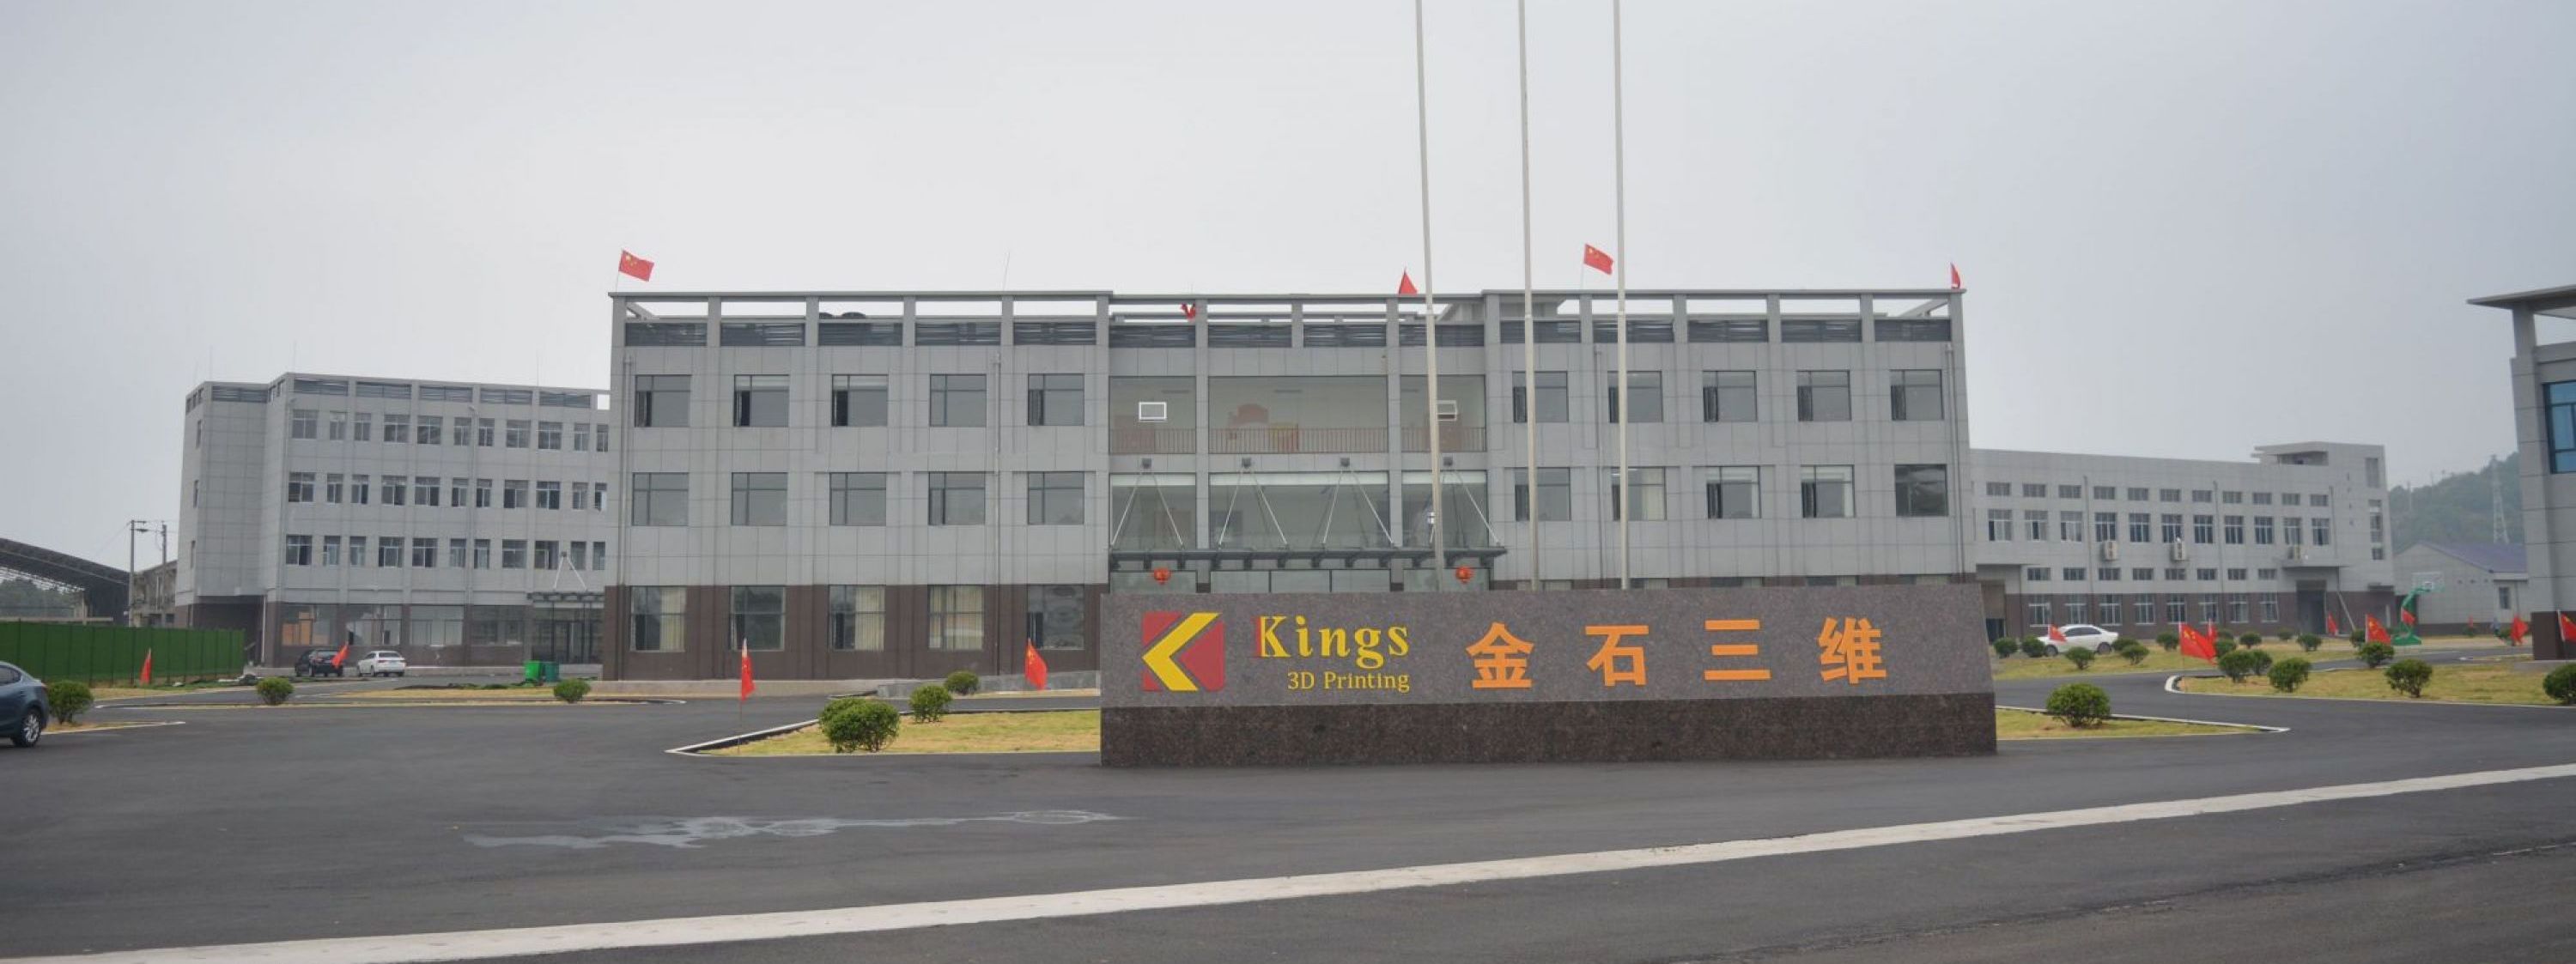 Kings - Firmengebäude